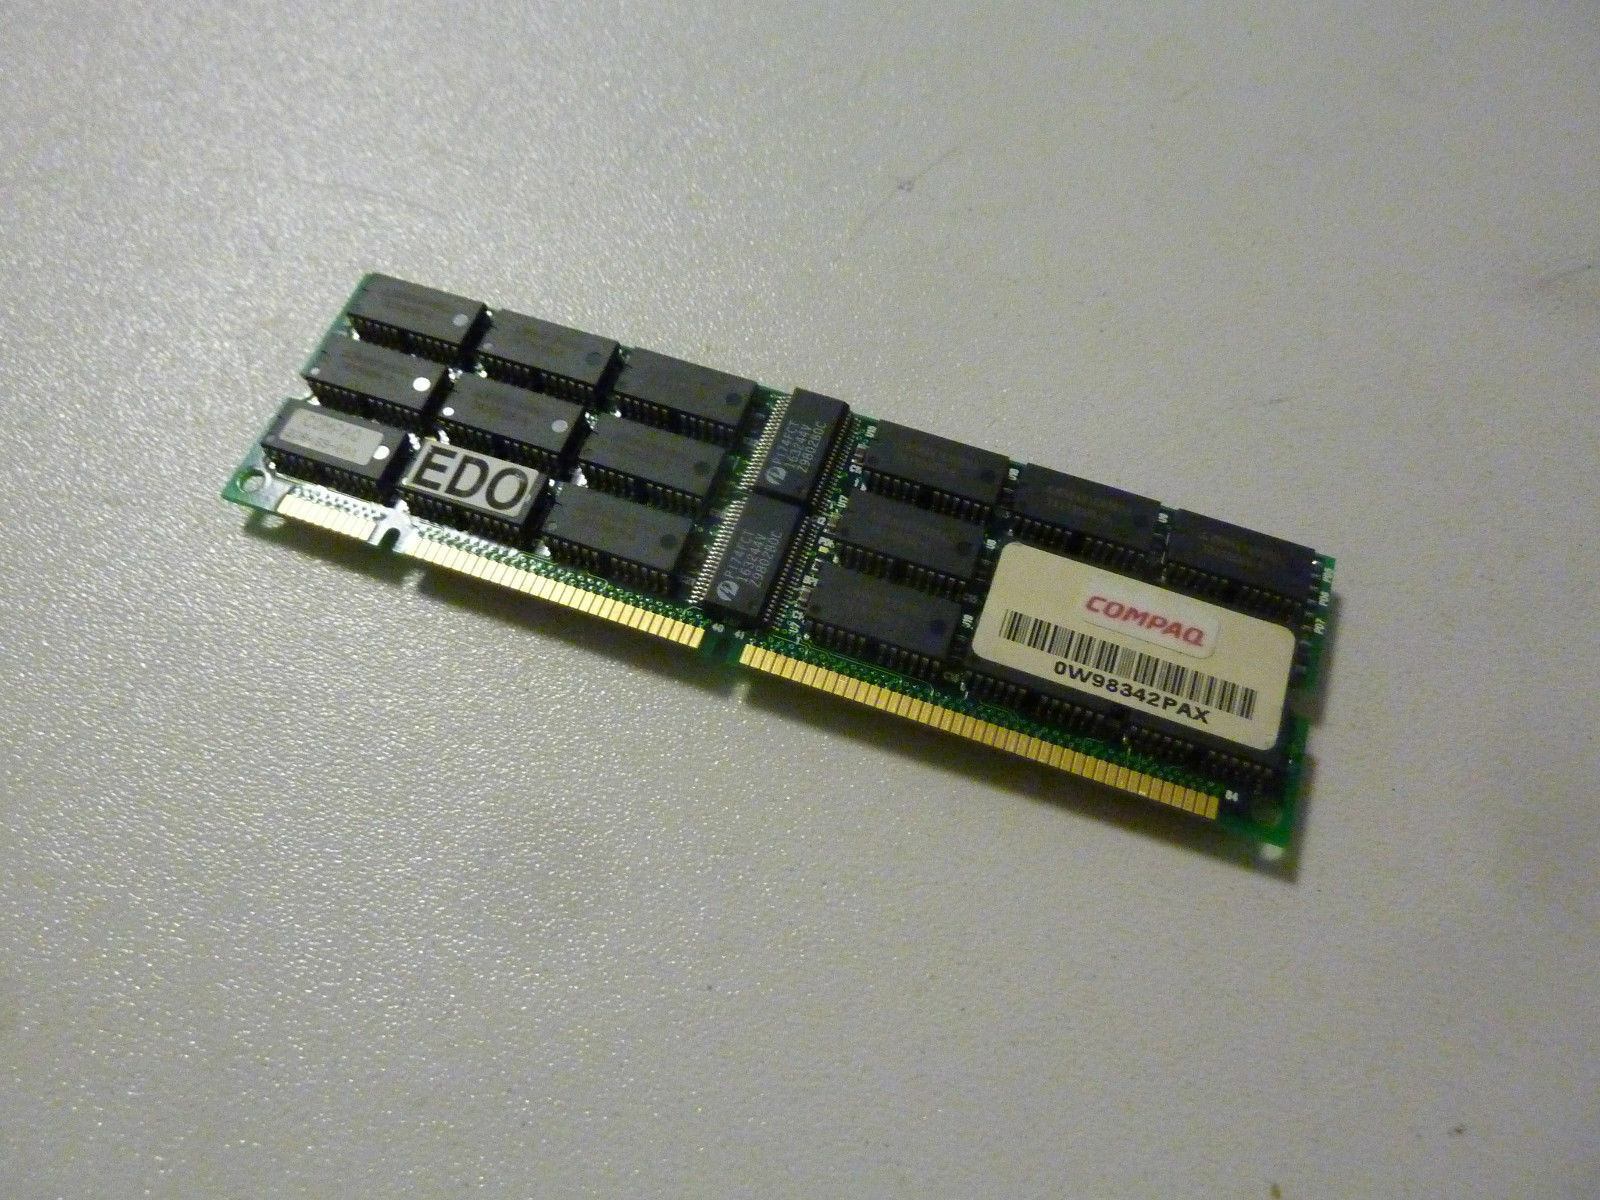 Compaq 64MB EDO DIMM Server RAM Memory- 228469-001